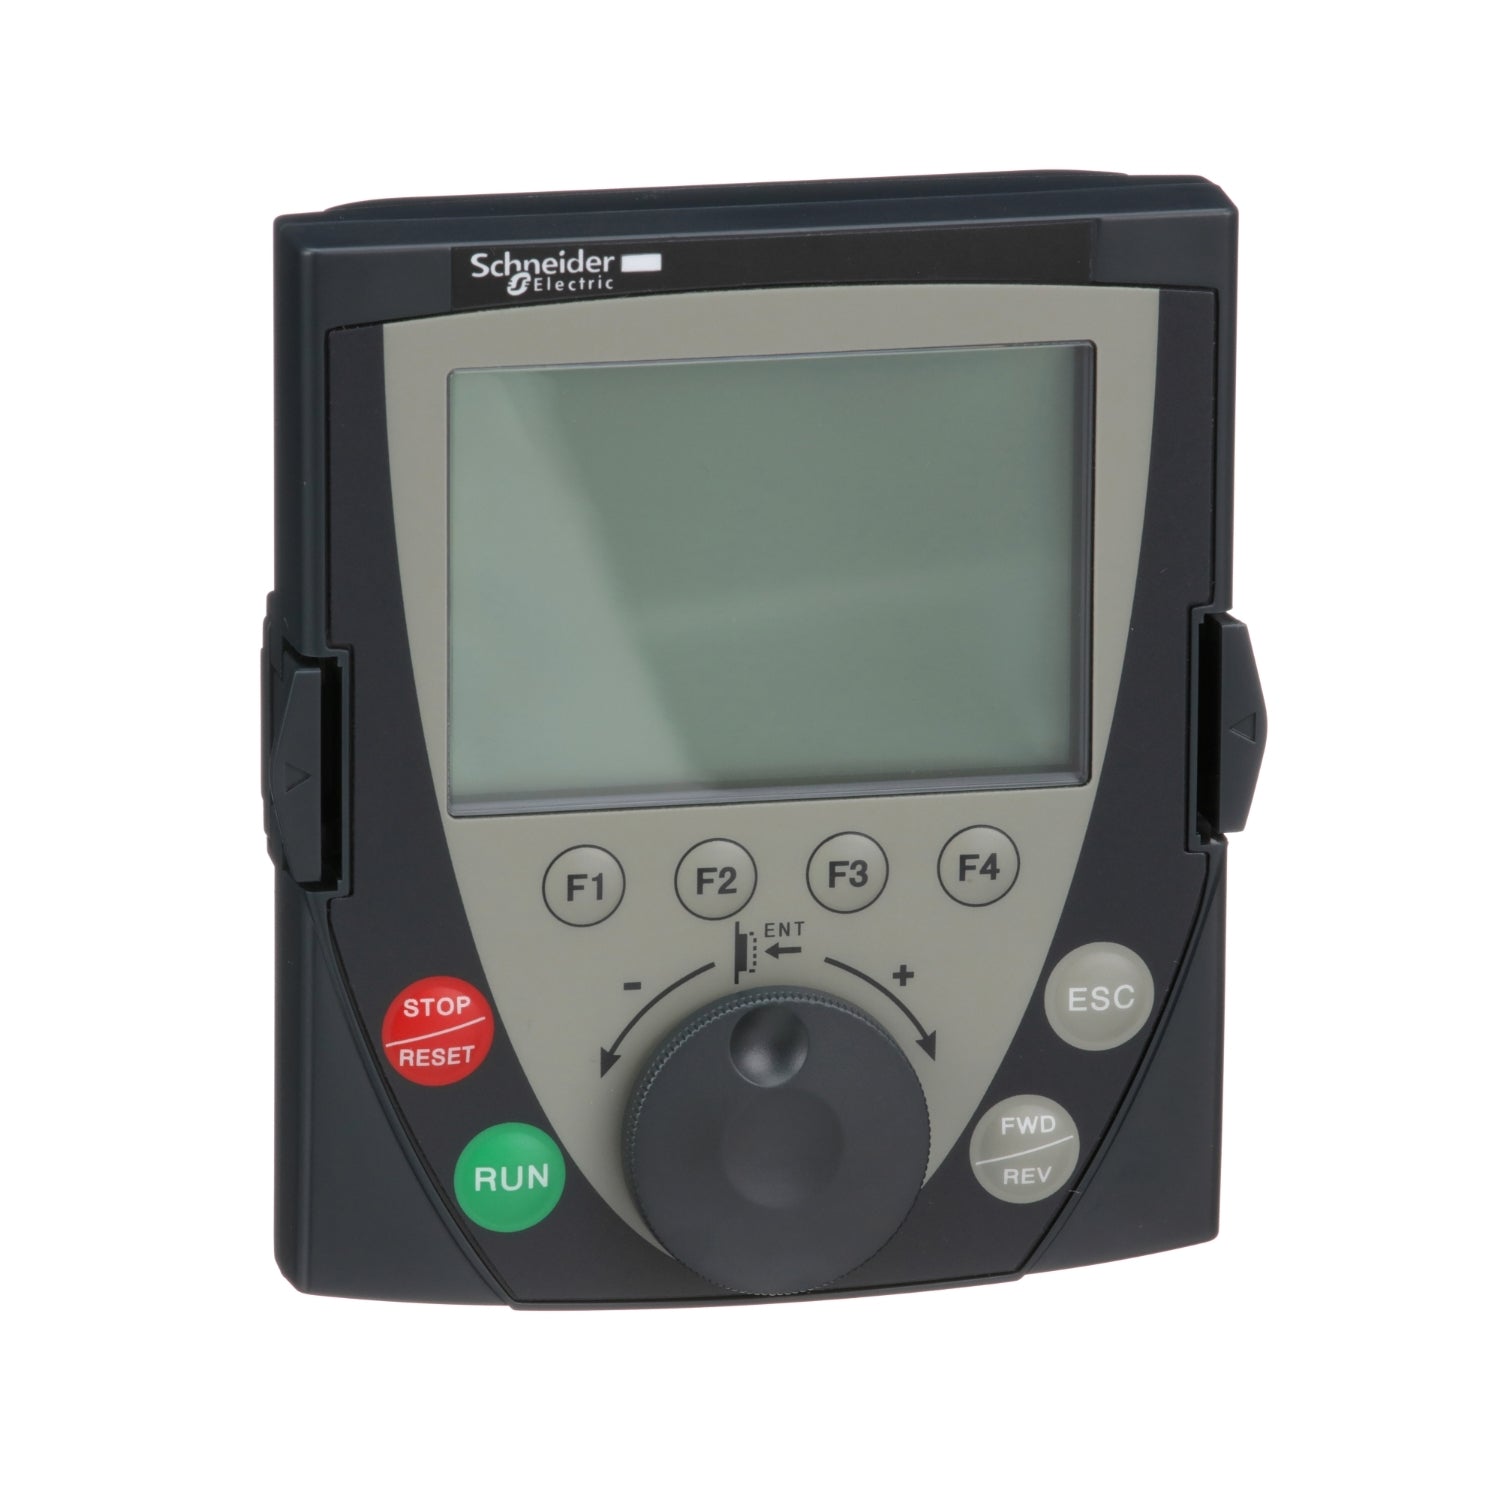 VW3A1101 | Schneider Electric Remote graphic terminal, Altivar, 240 x 160 pixels, IP54